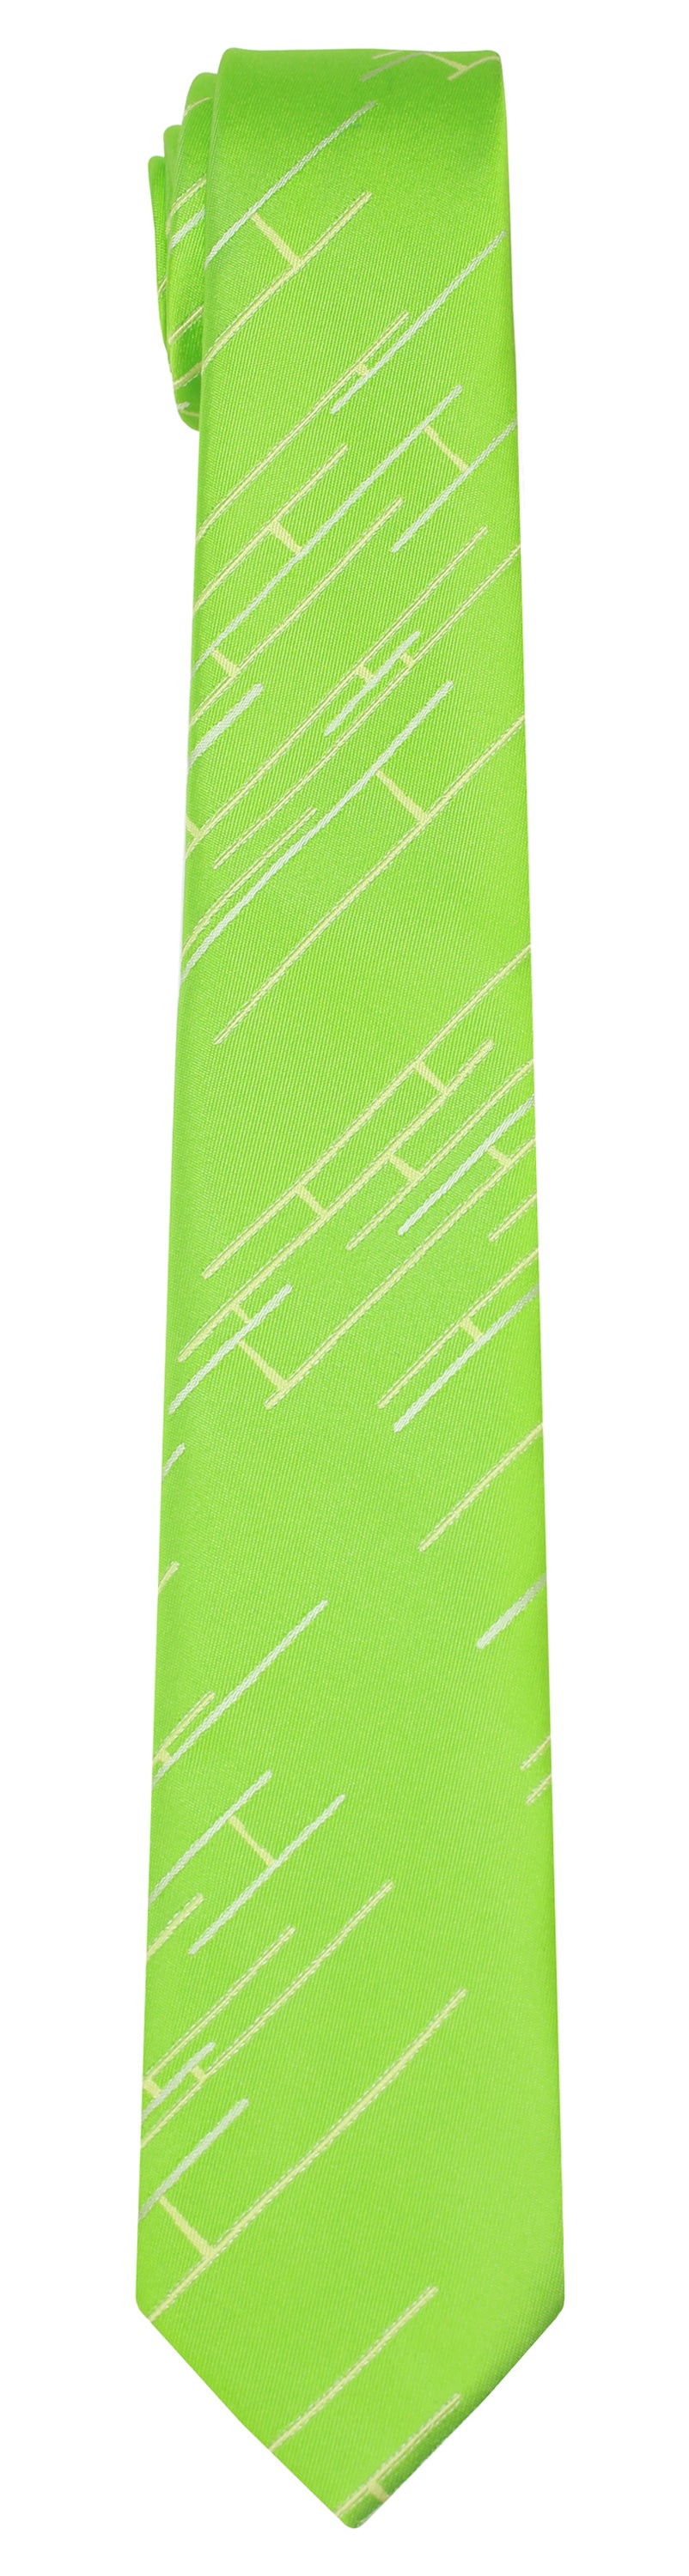 Mimi Fong Linked Tie in Green